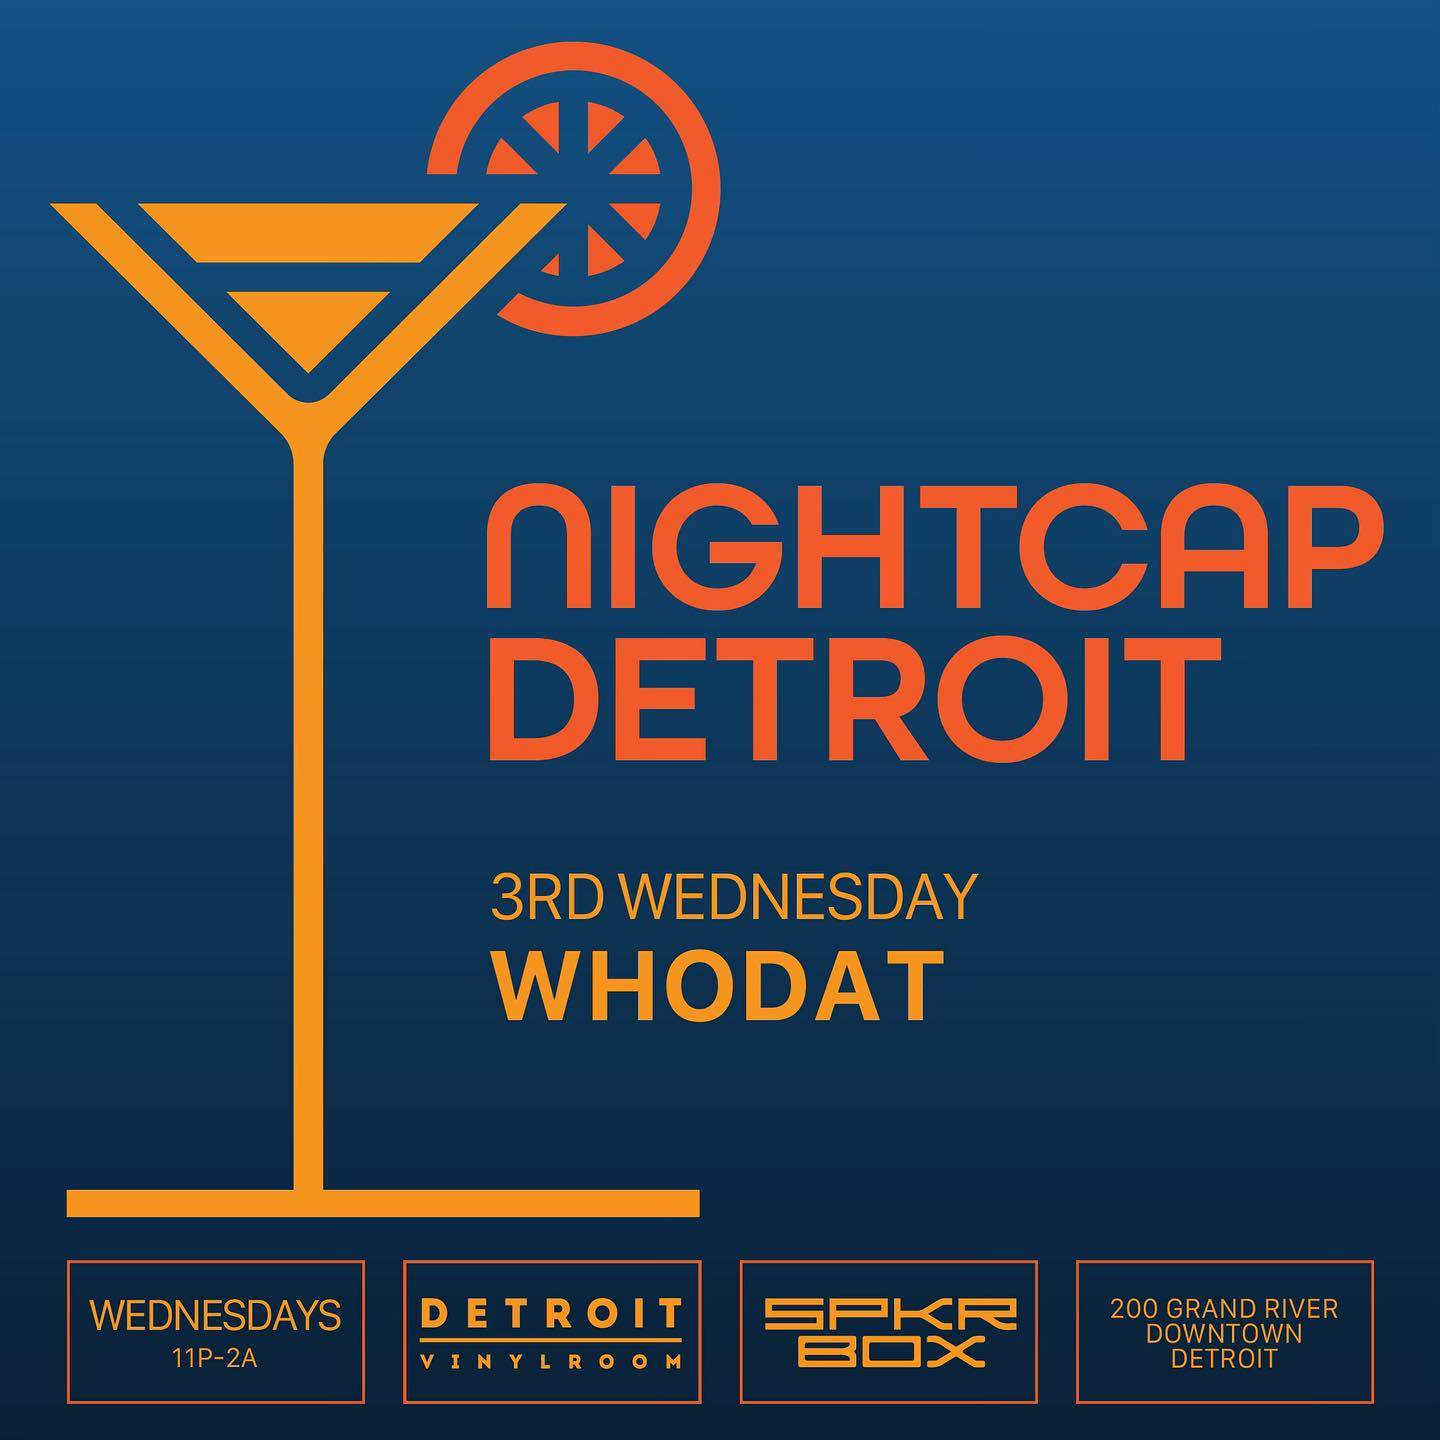 Nightcap Detroit with Whodat - フライヤー表